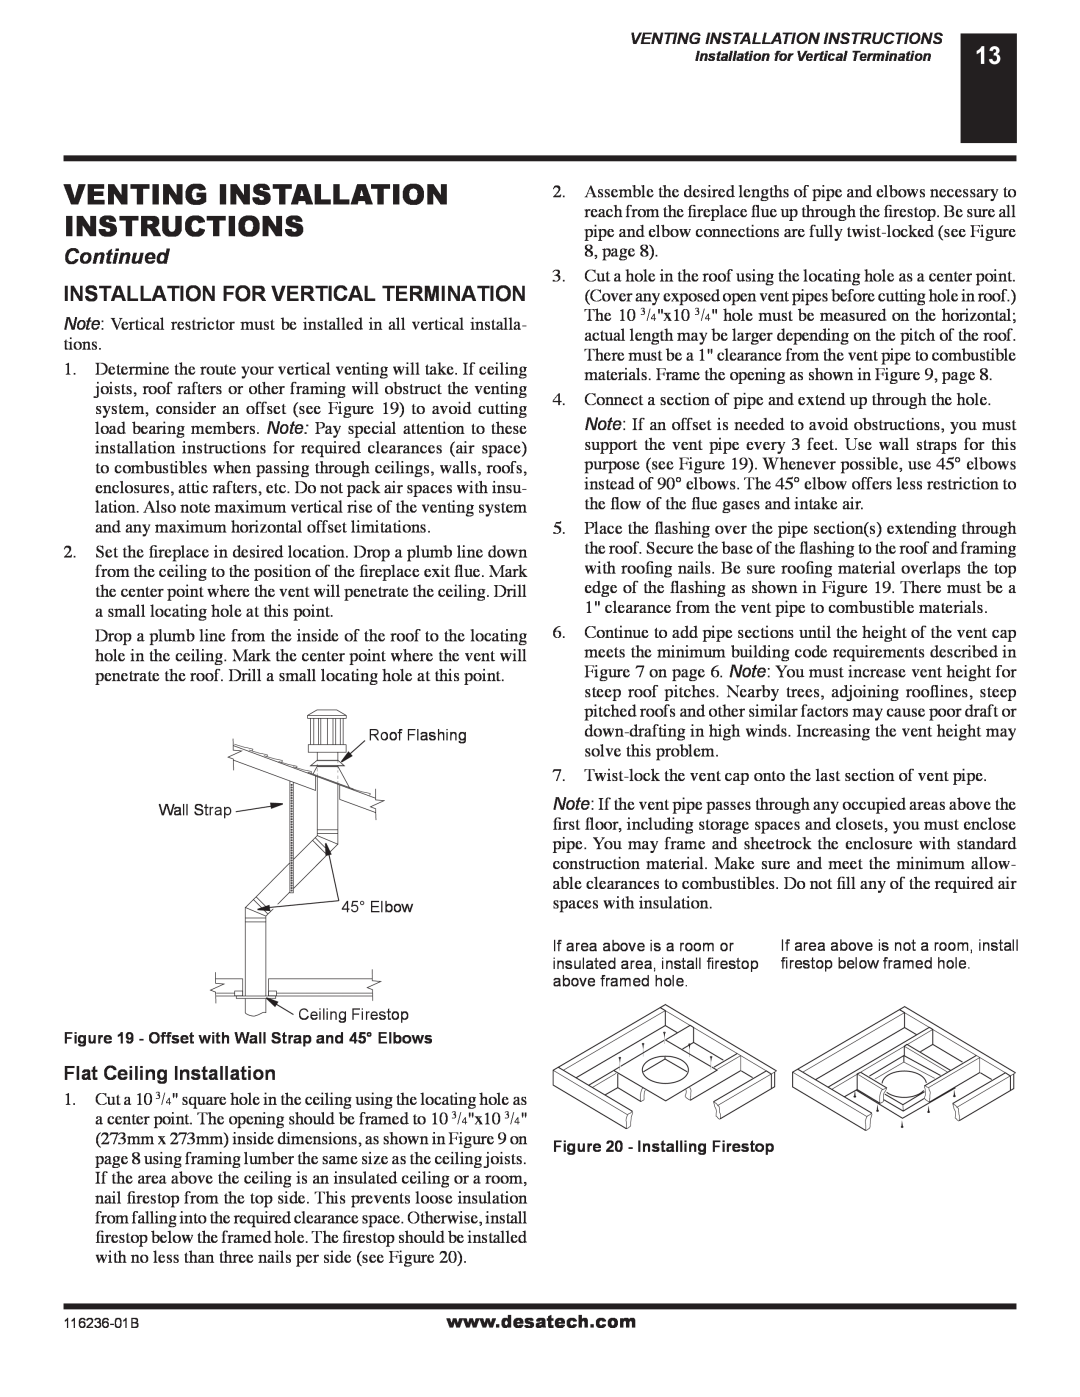 Desa (V)VC42N SERIES Installation For Vertical Termination, Flat Ceiling Installation, Venting Installation Instructions 